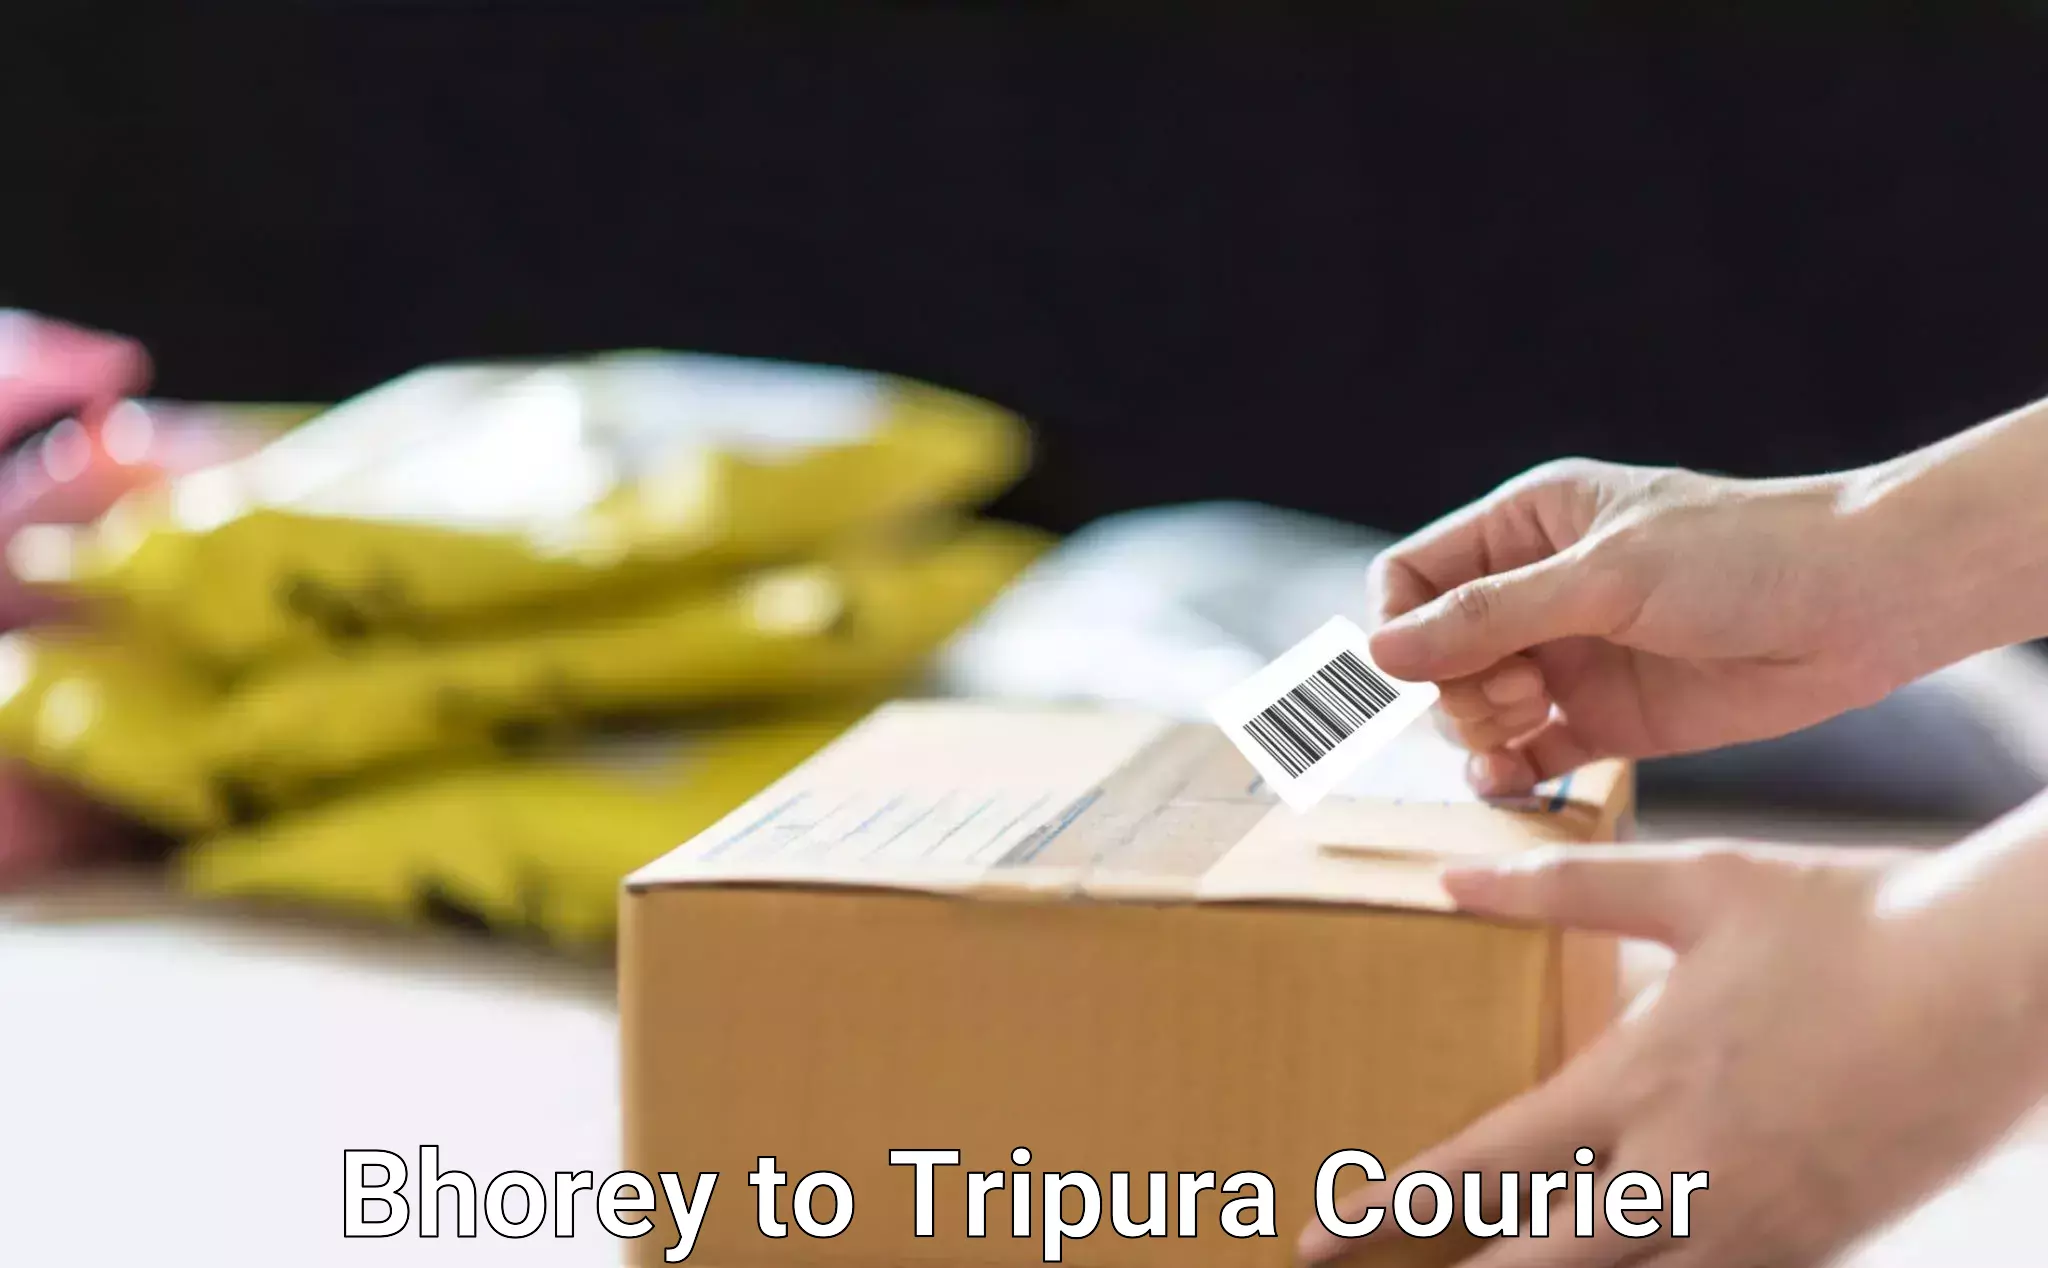 Specialized moving company Bhorey to Udaipur Tripura